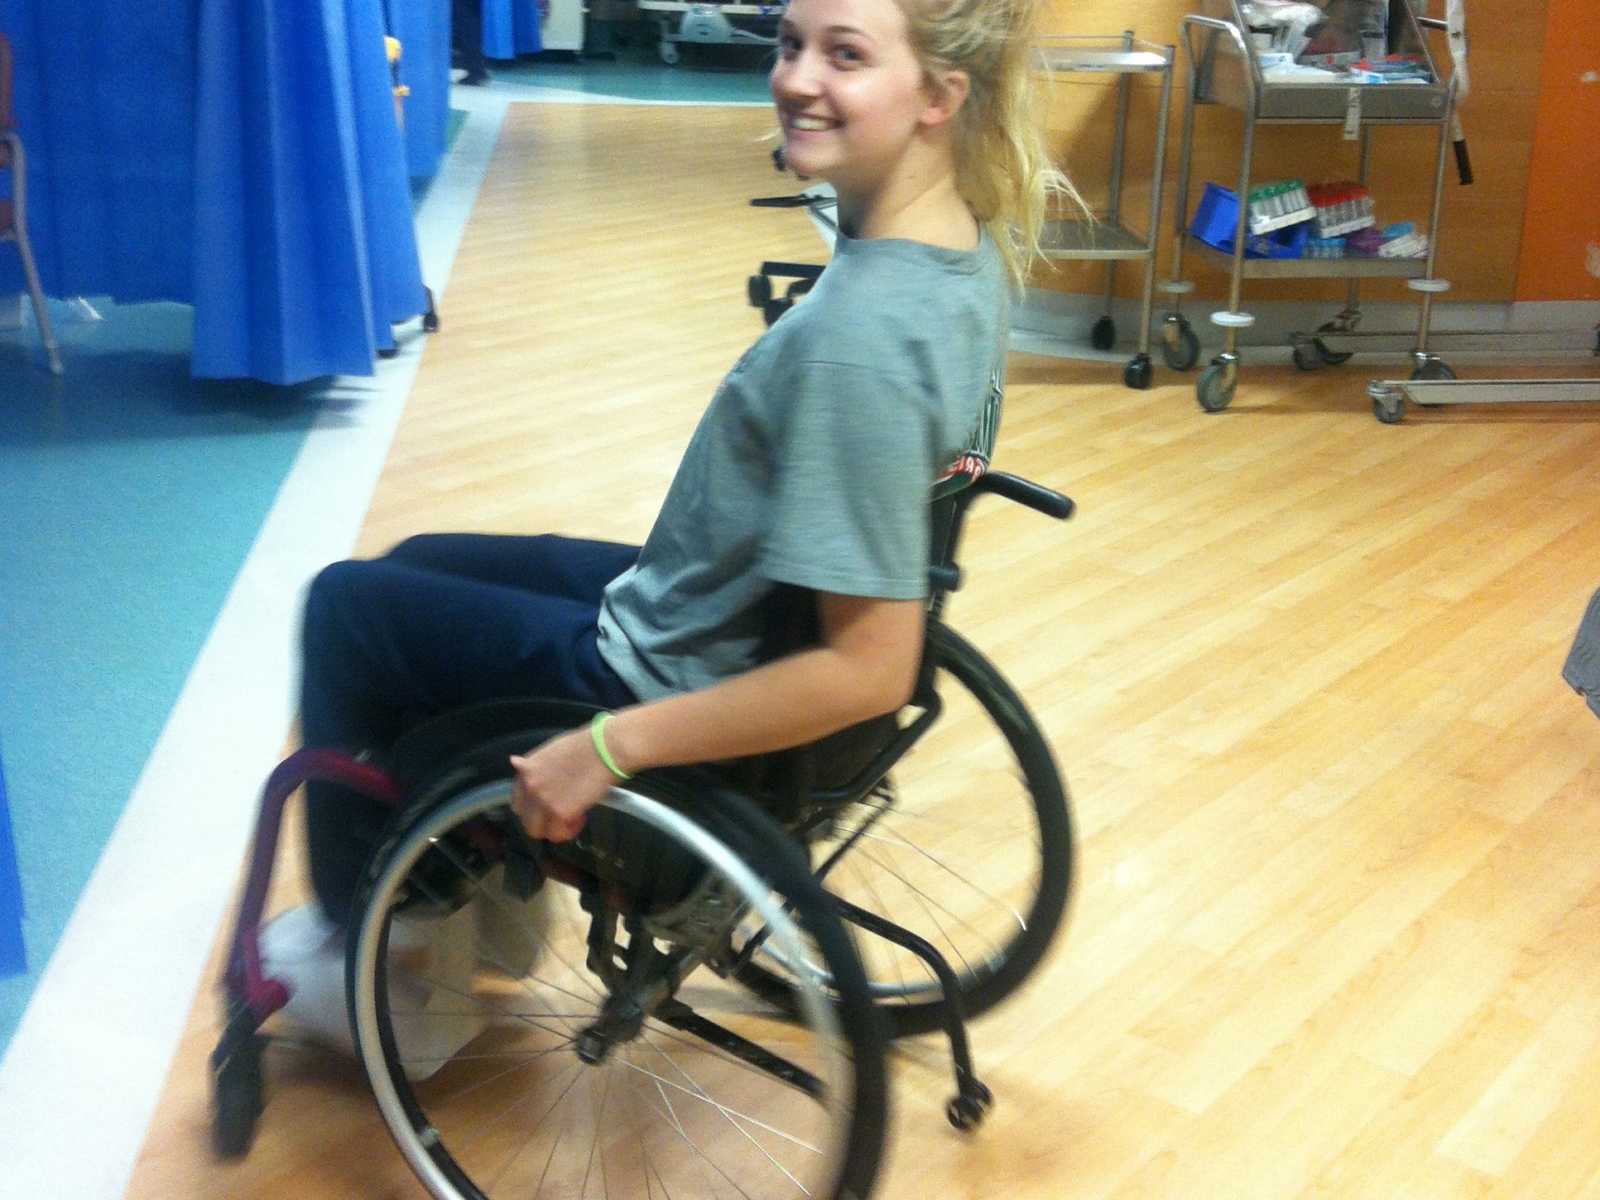 Paraplegic woman in wheelchair looks over shoulder smiling in hospital